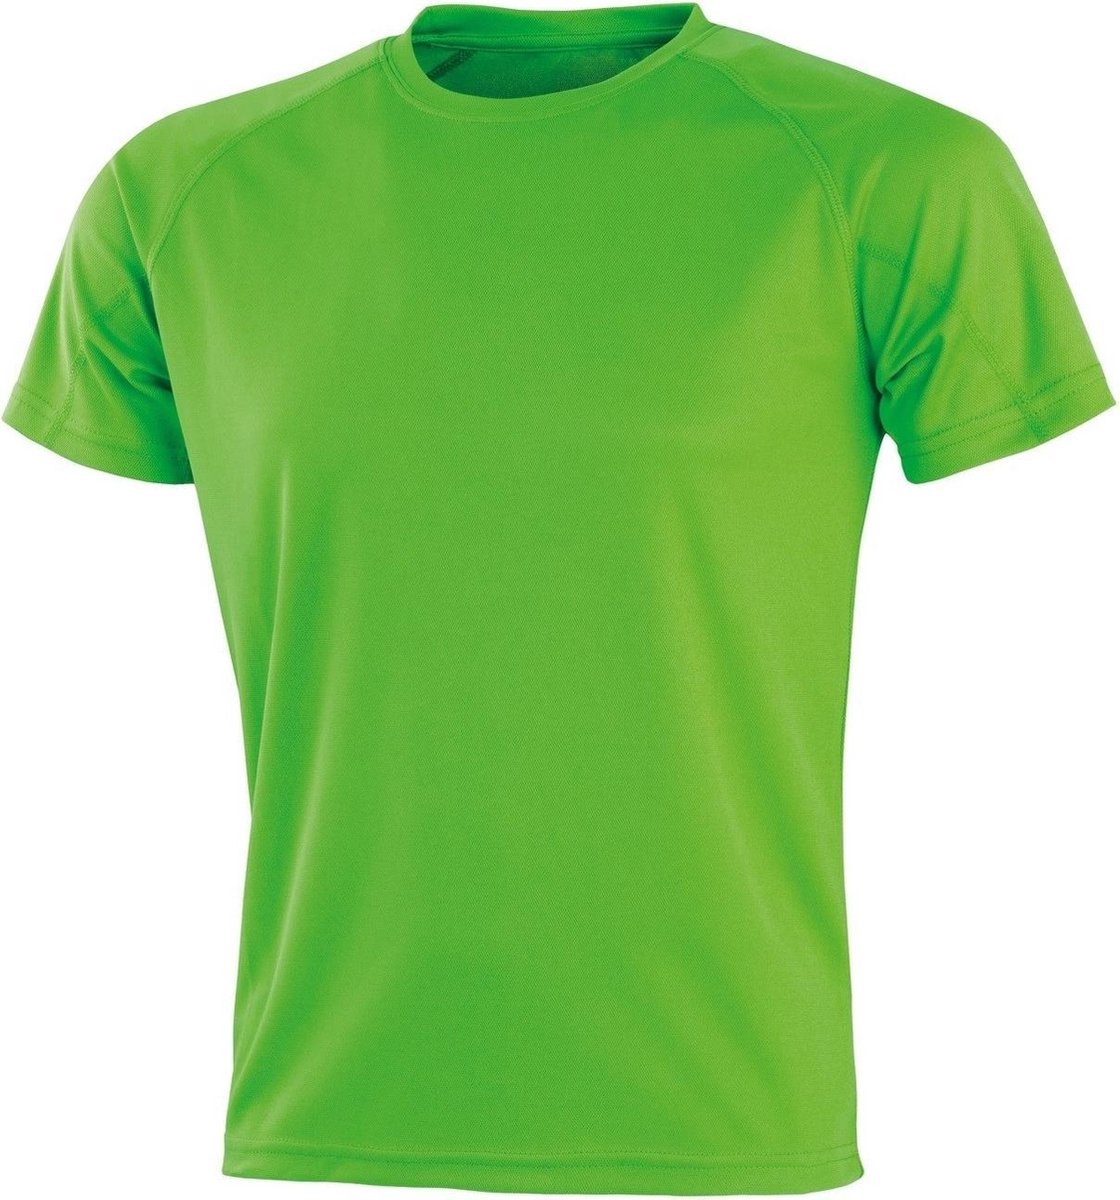 Senvi Sports Performance T-Shirt - Lime - XXS - Unisex